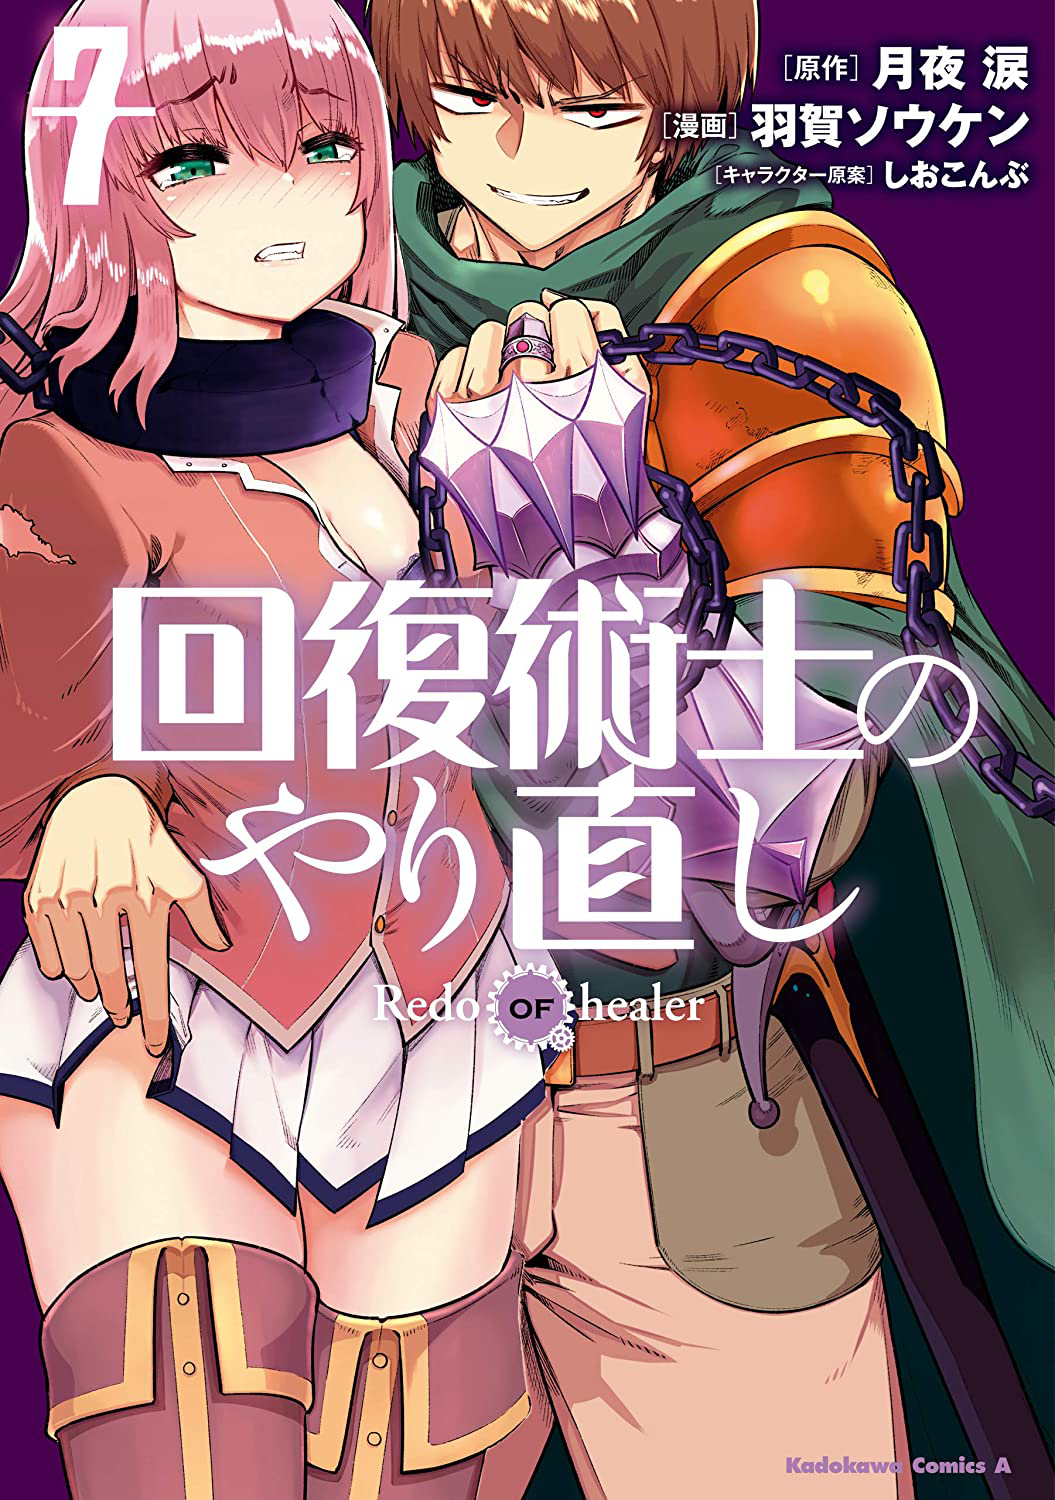 Redo of Healer season 2 manga chapters that will be covered